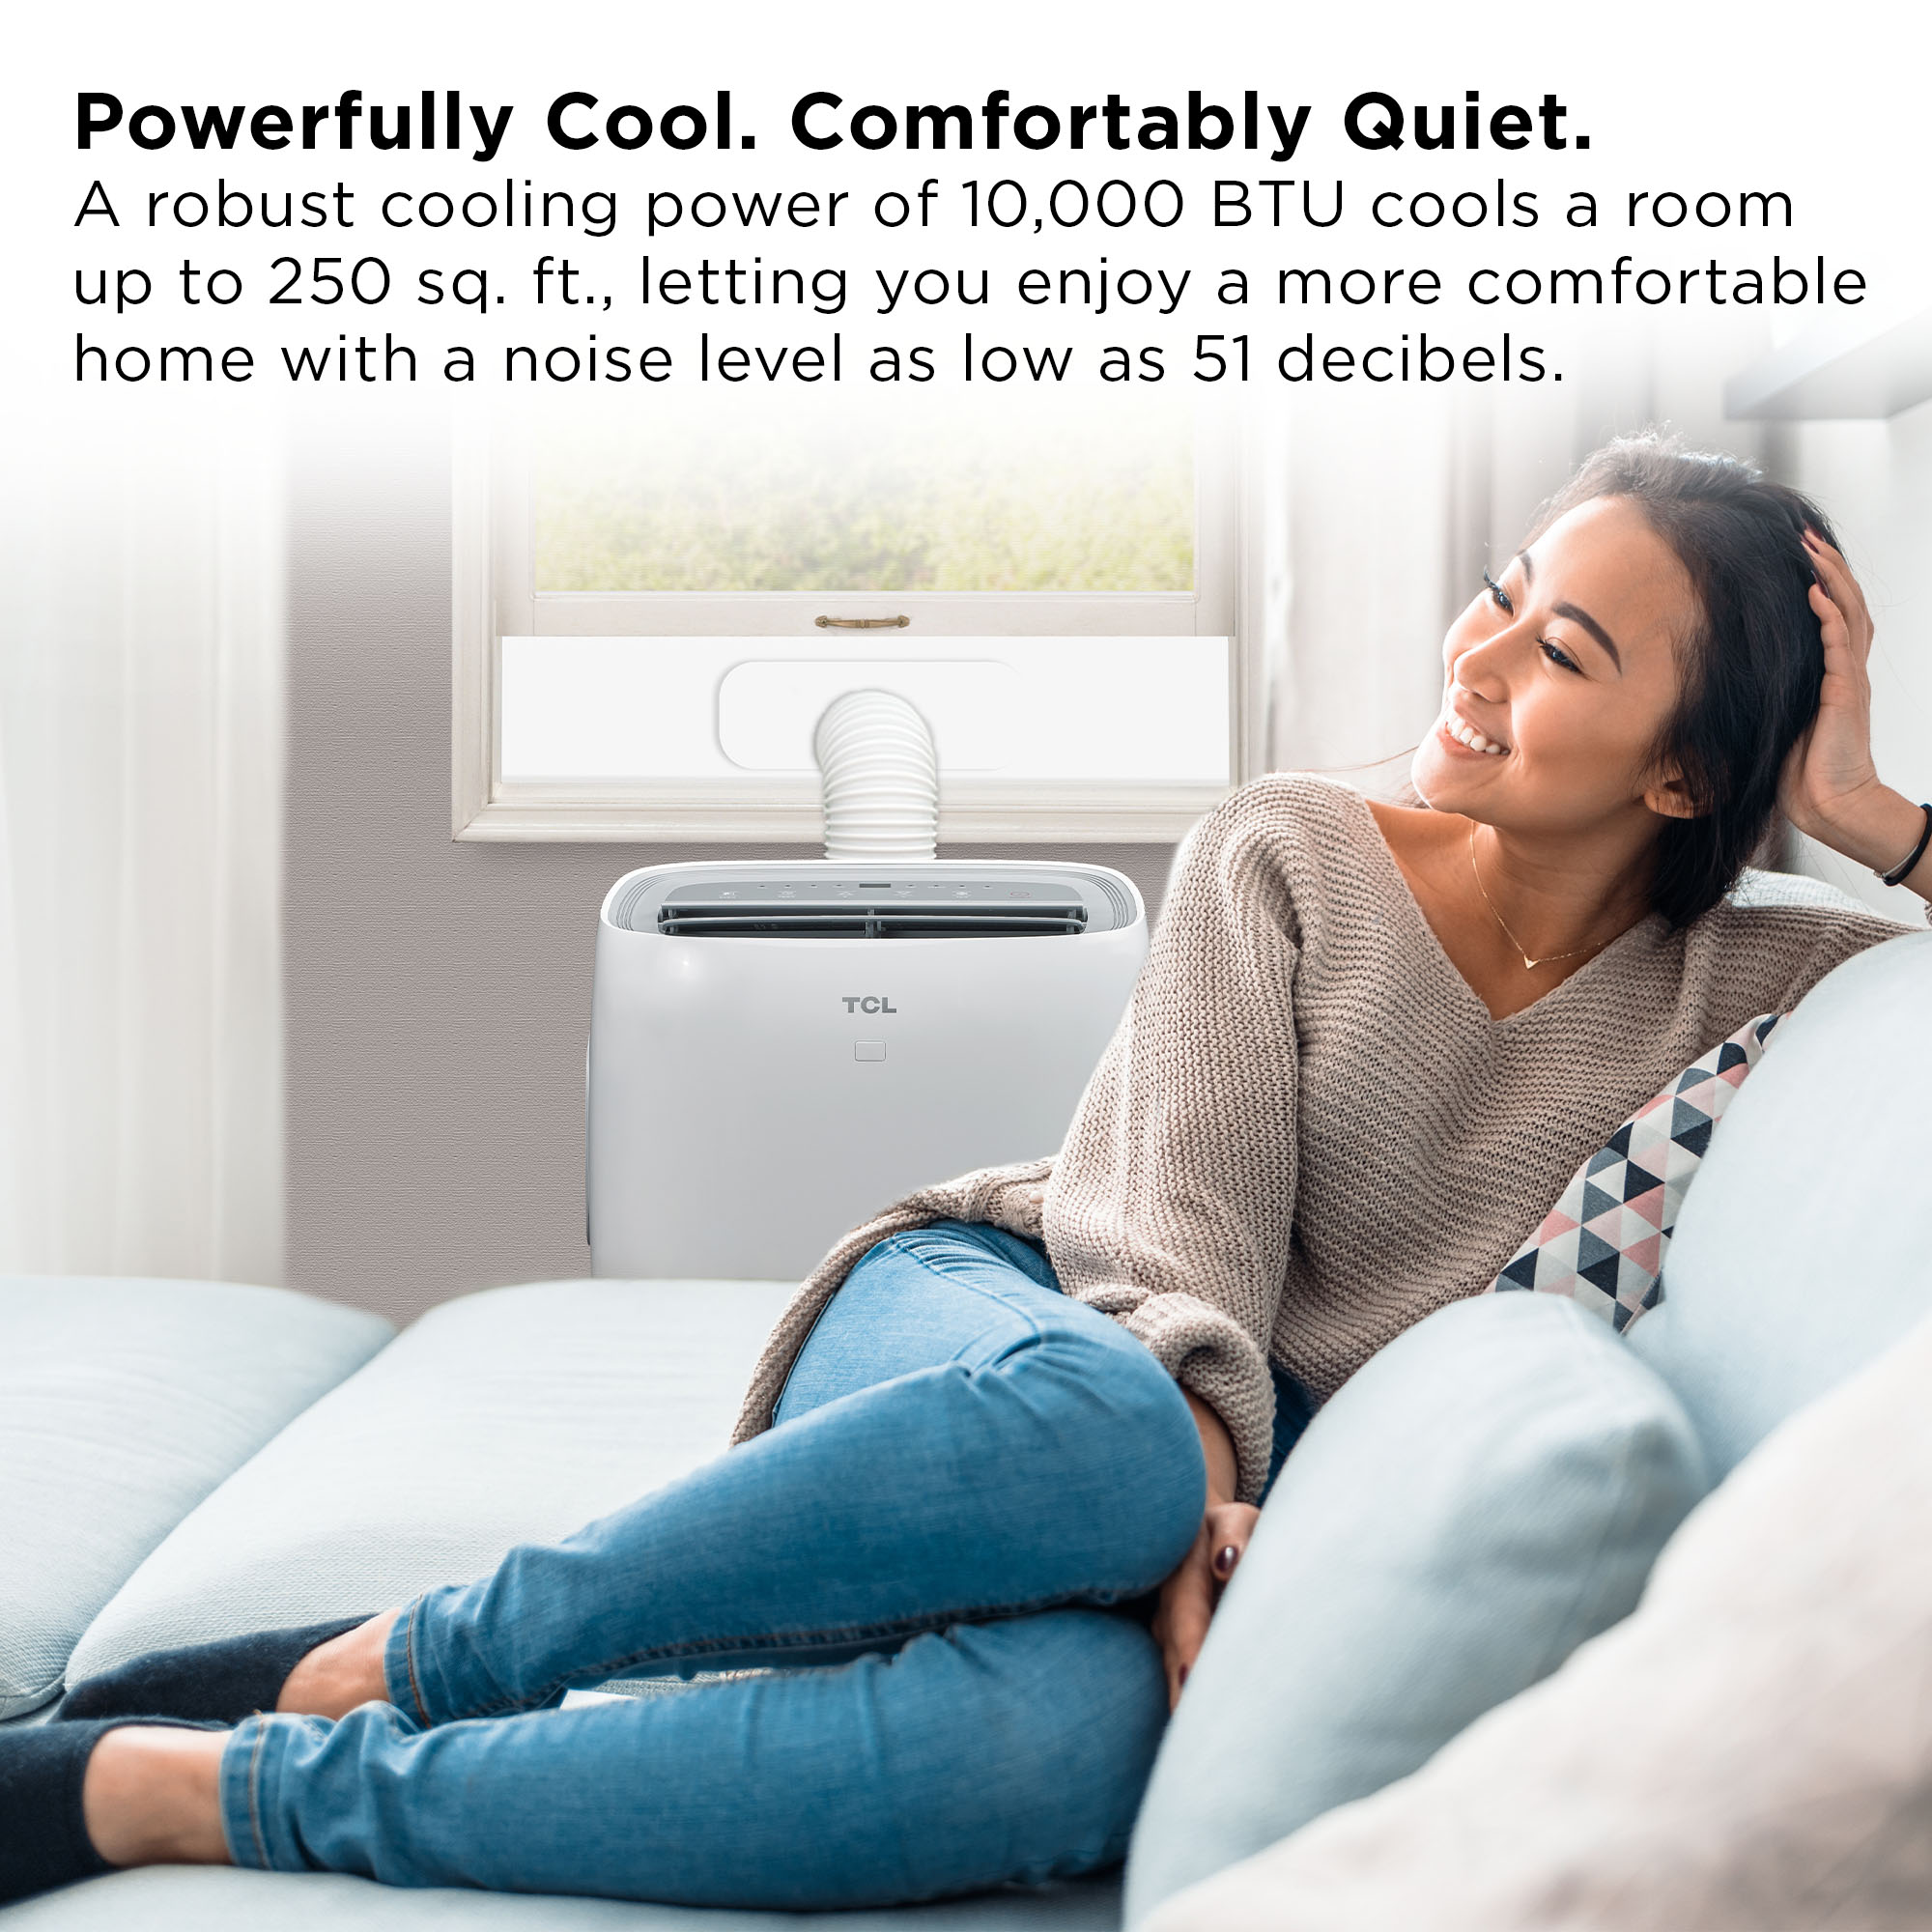 TCL Home 6,000 BTU 115-Volt Smart Portable Air Conditioner, Remote, White, W10P92 - image 3 of 14